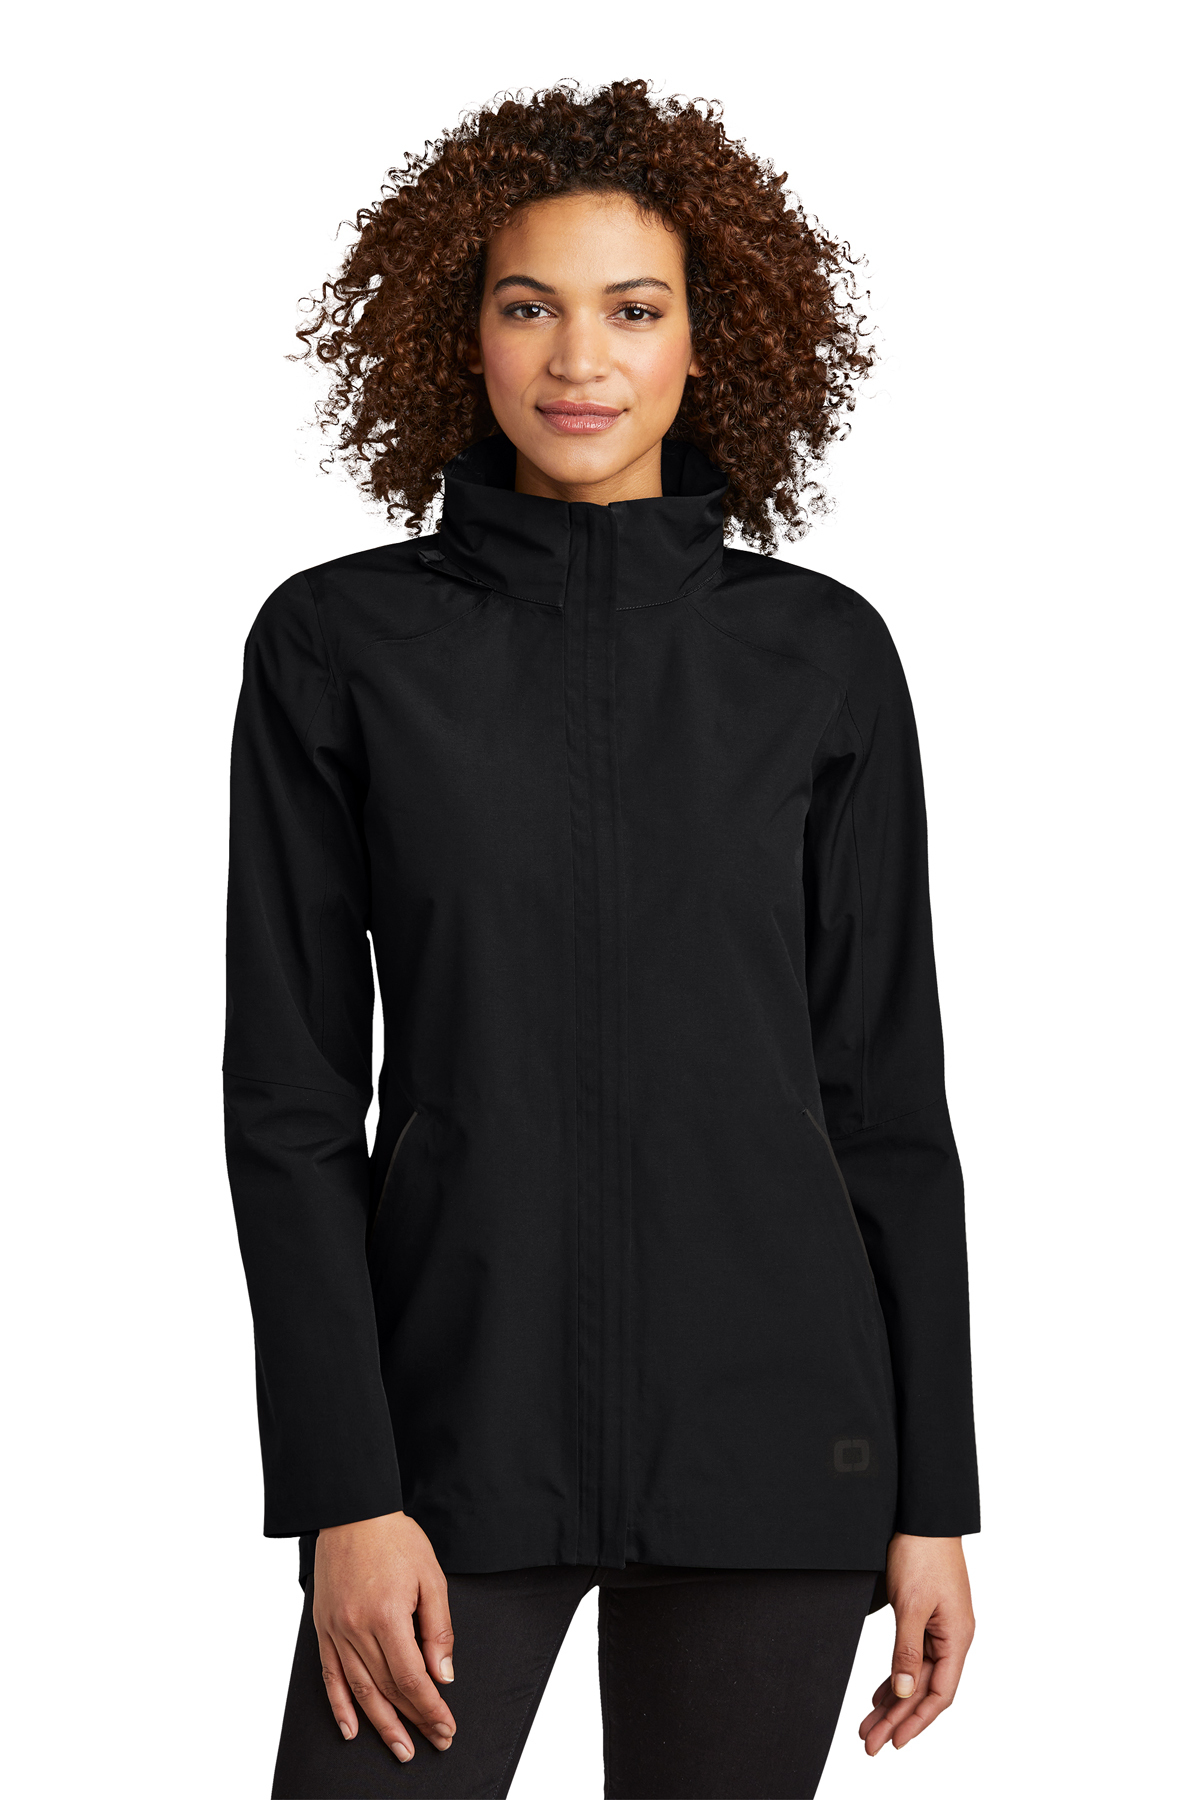 OGIO Ladies Utilitarian Jacket | Product | Company Casuals